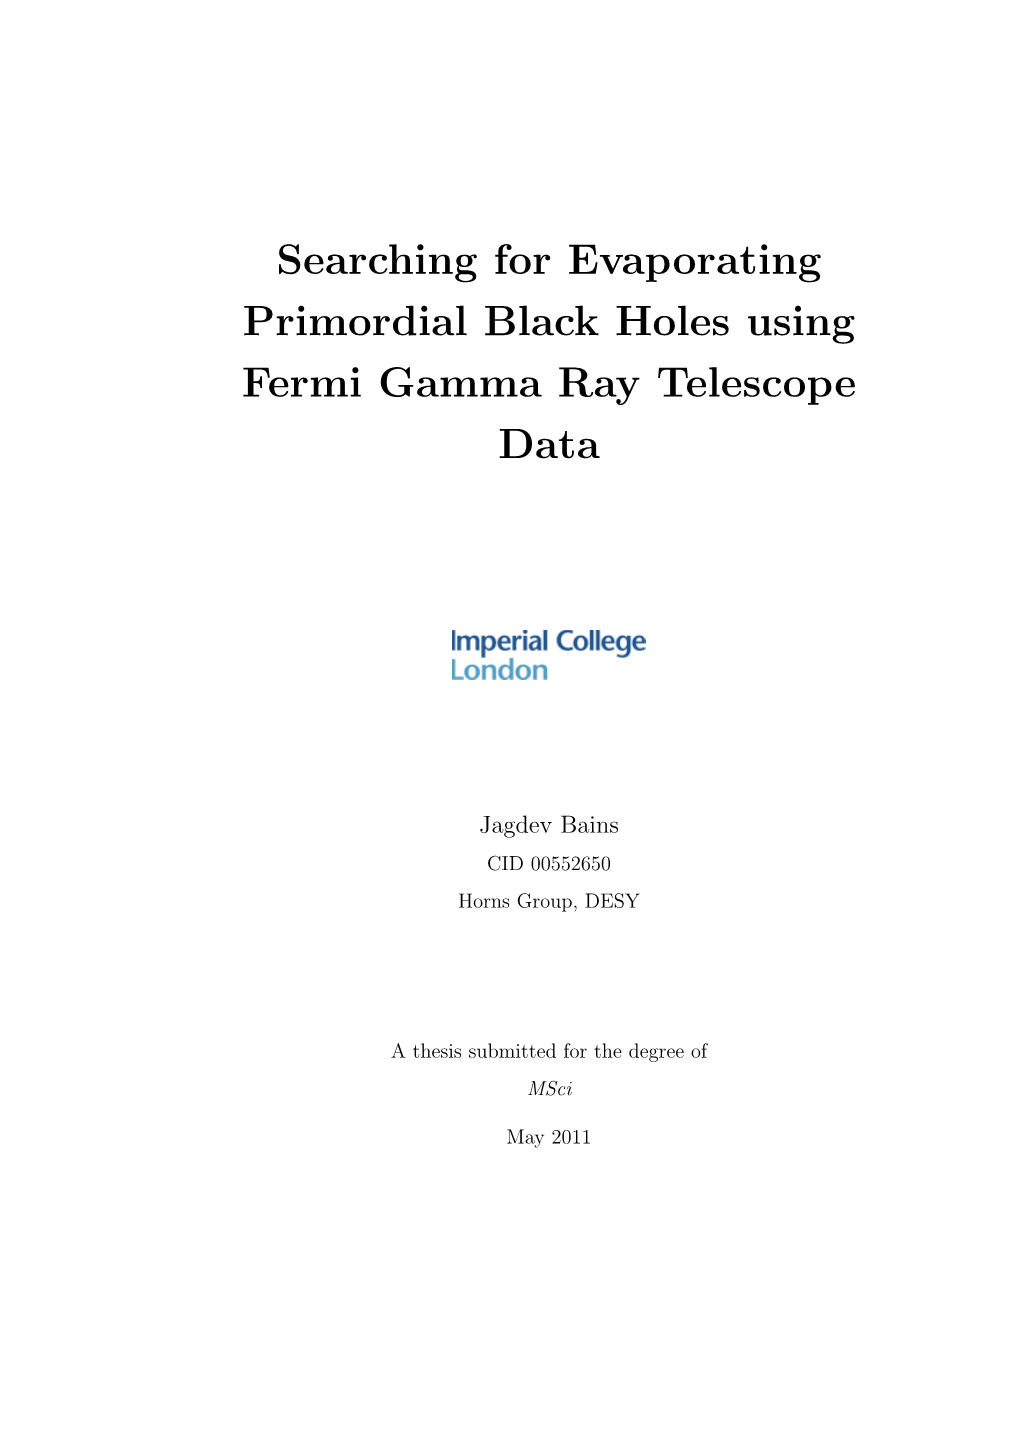 Searching for Evaporating Primordial Black Holes Using Fermi Gamma Ray Telescope Data